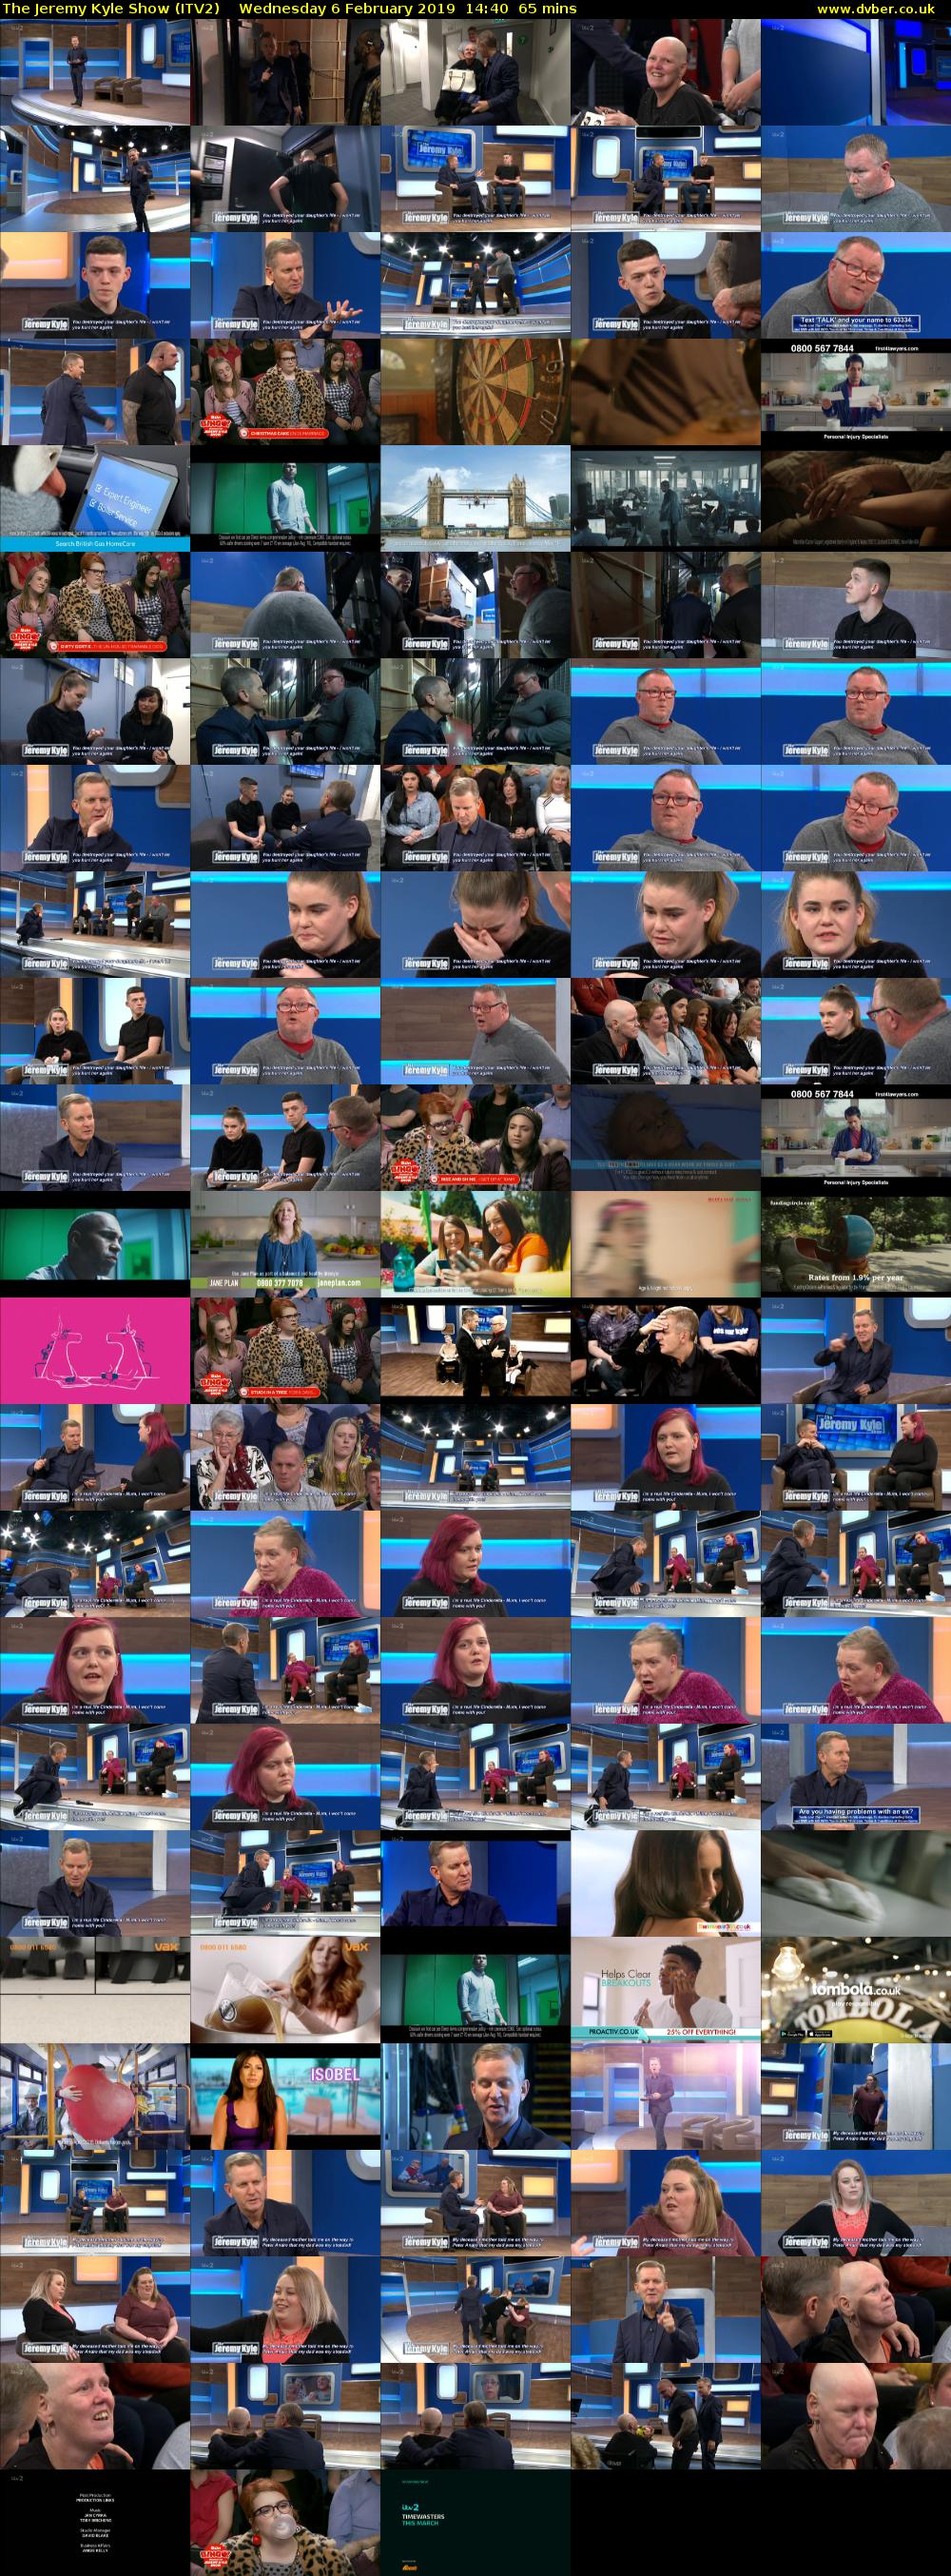 The Jeremy Kyle Show (ITV2) Wednesday 6 February 2019 14:40 - 15:45